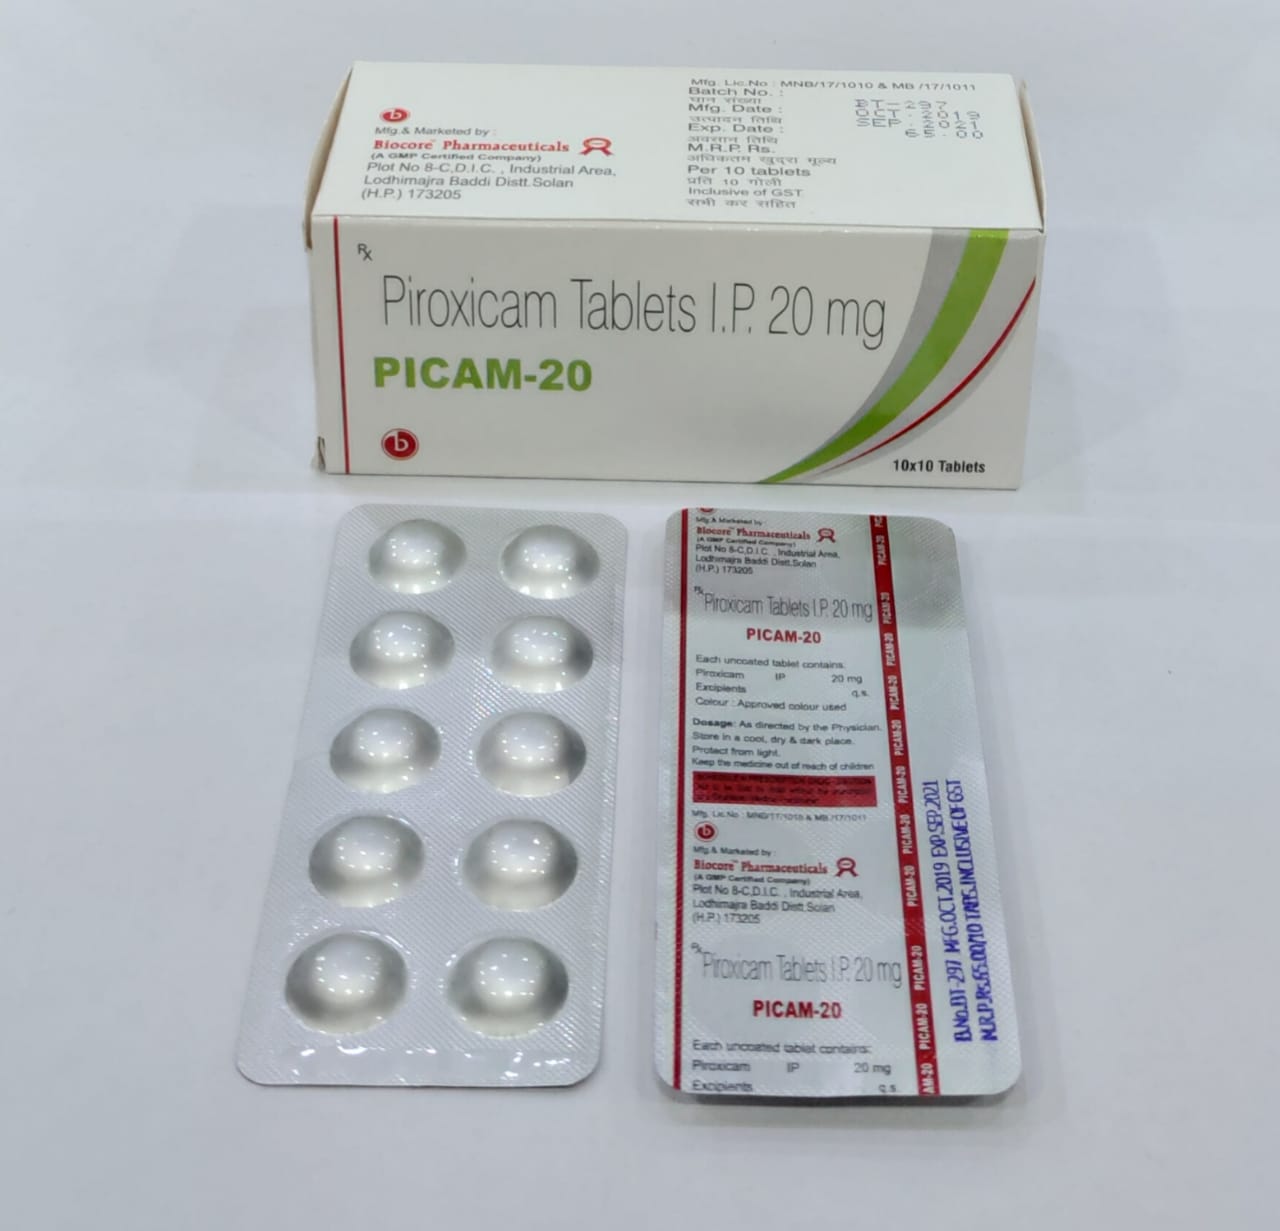 PICAM-20 Tablets